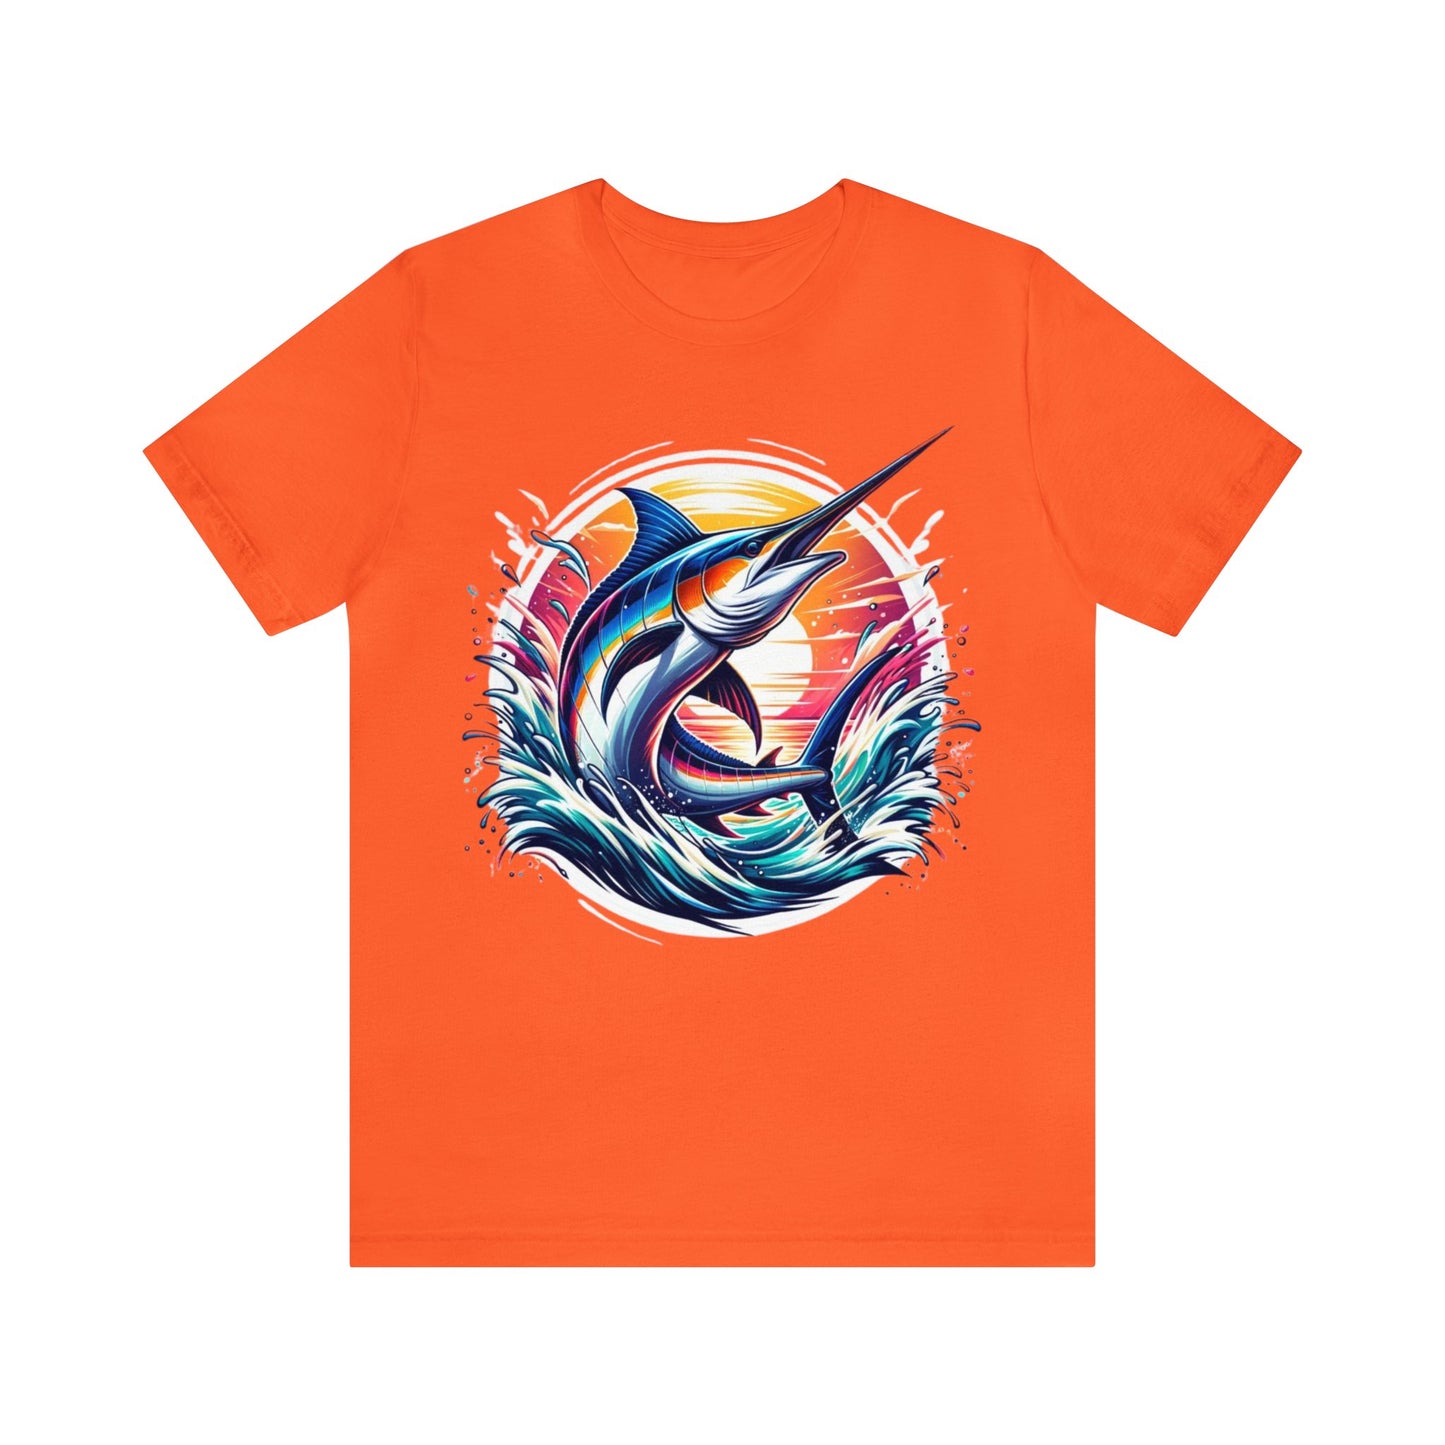 Vibrant Marlin Splash T-Shirt – Dynamic Oceanic Art Tee for Sea Life Lovers